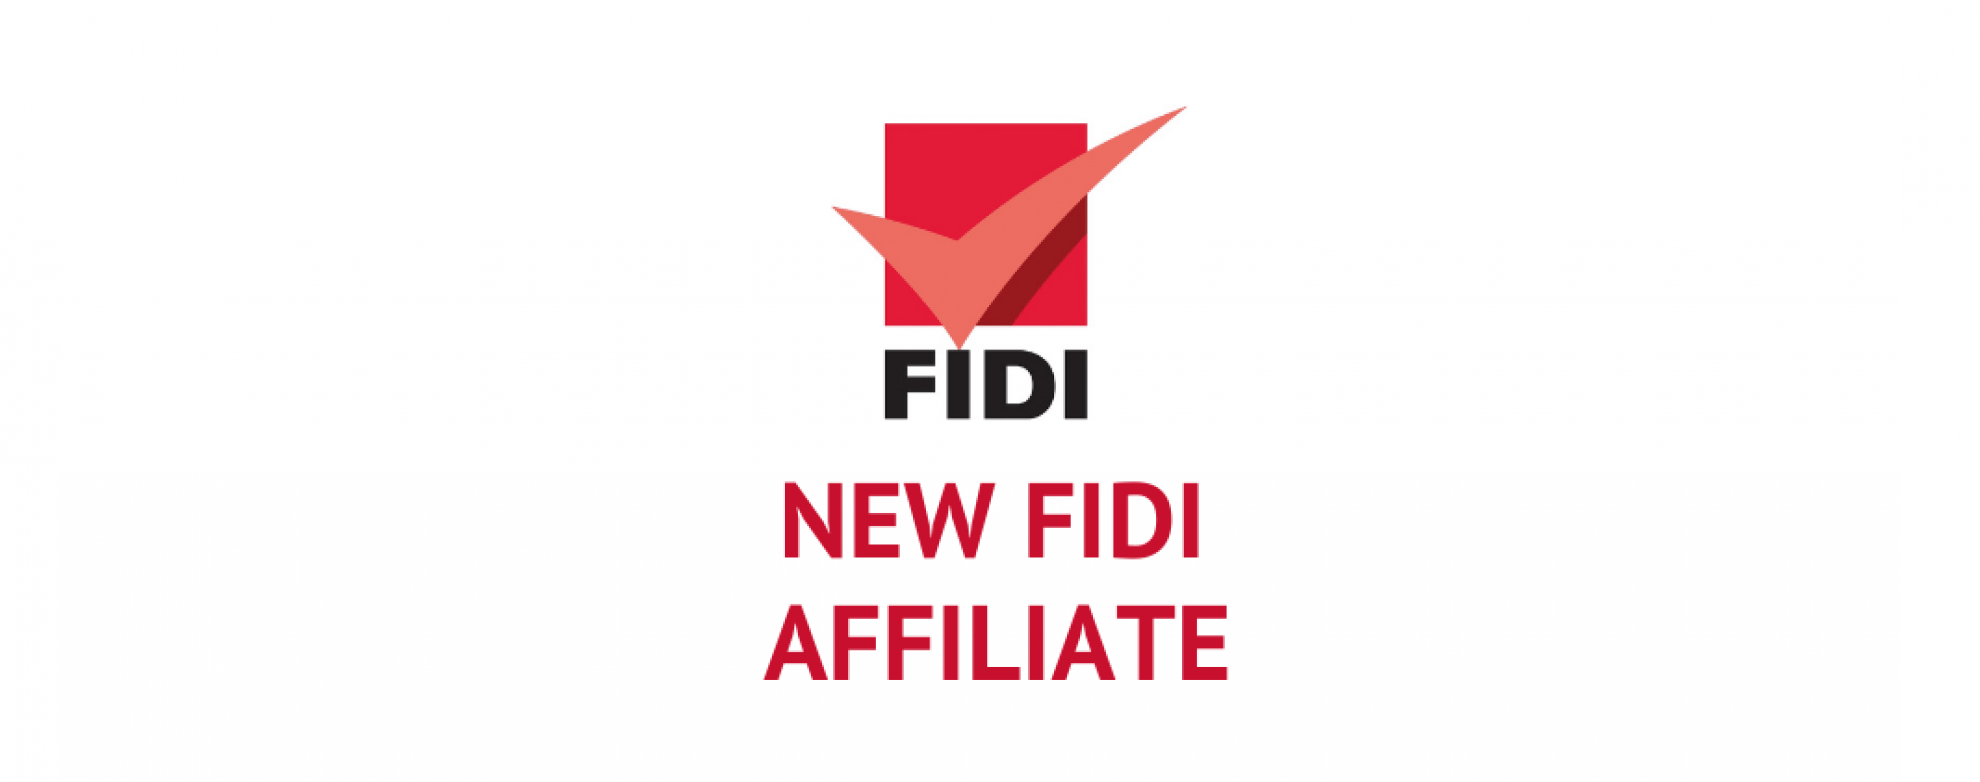 New FIDI Affiliate - Schmidt Global Relocations BV, Utrecht, The Netherlands